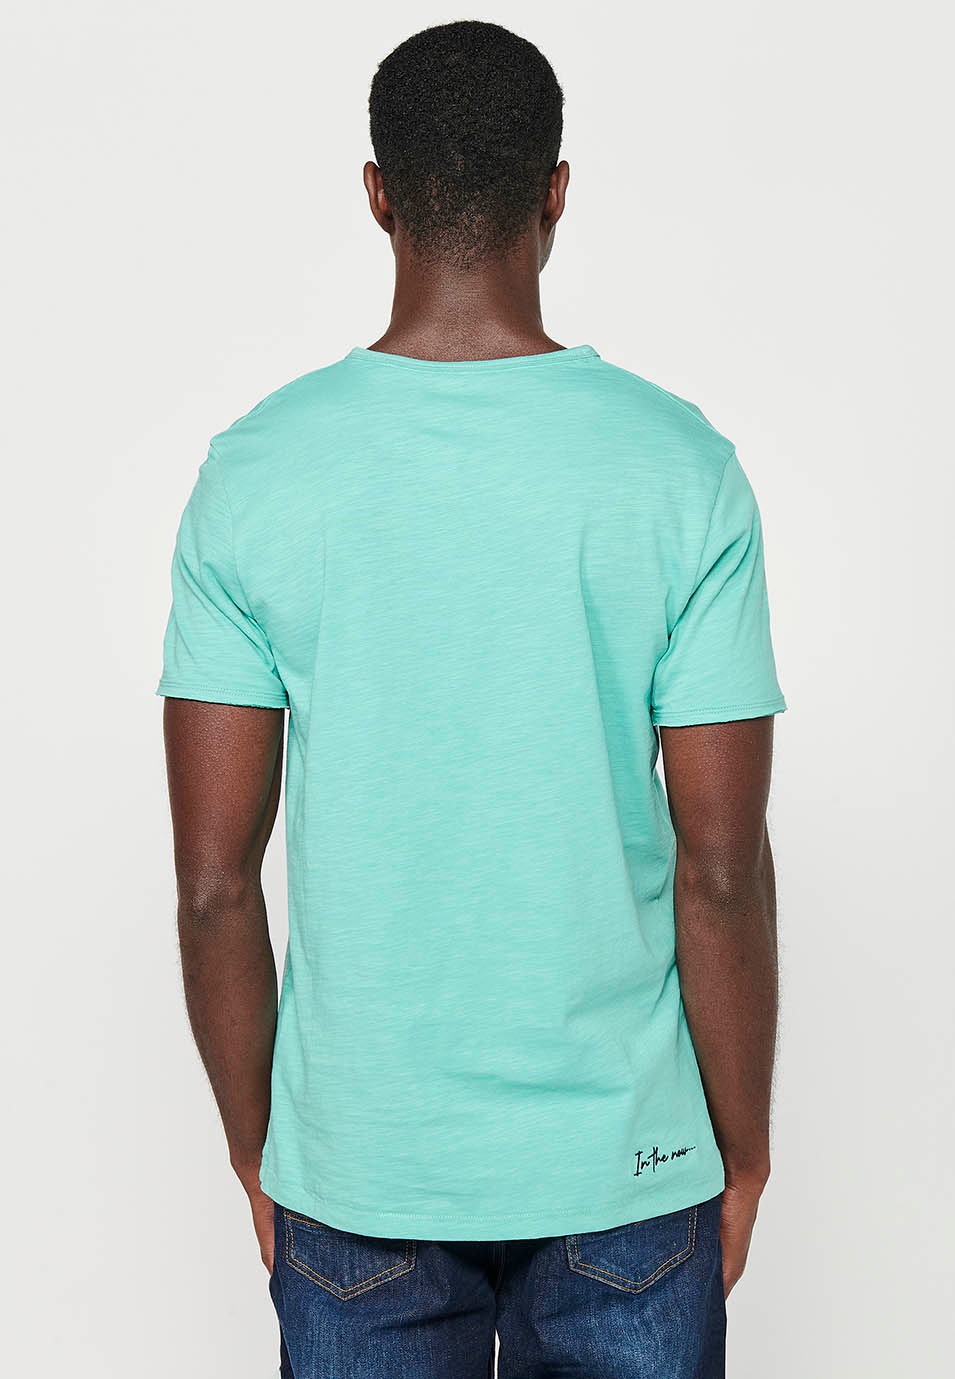 Camiseta básica de manga corta de algodón, cuello V con boton, color menta para hombre 2